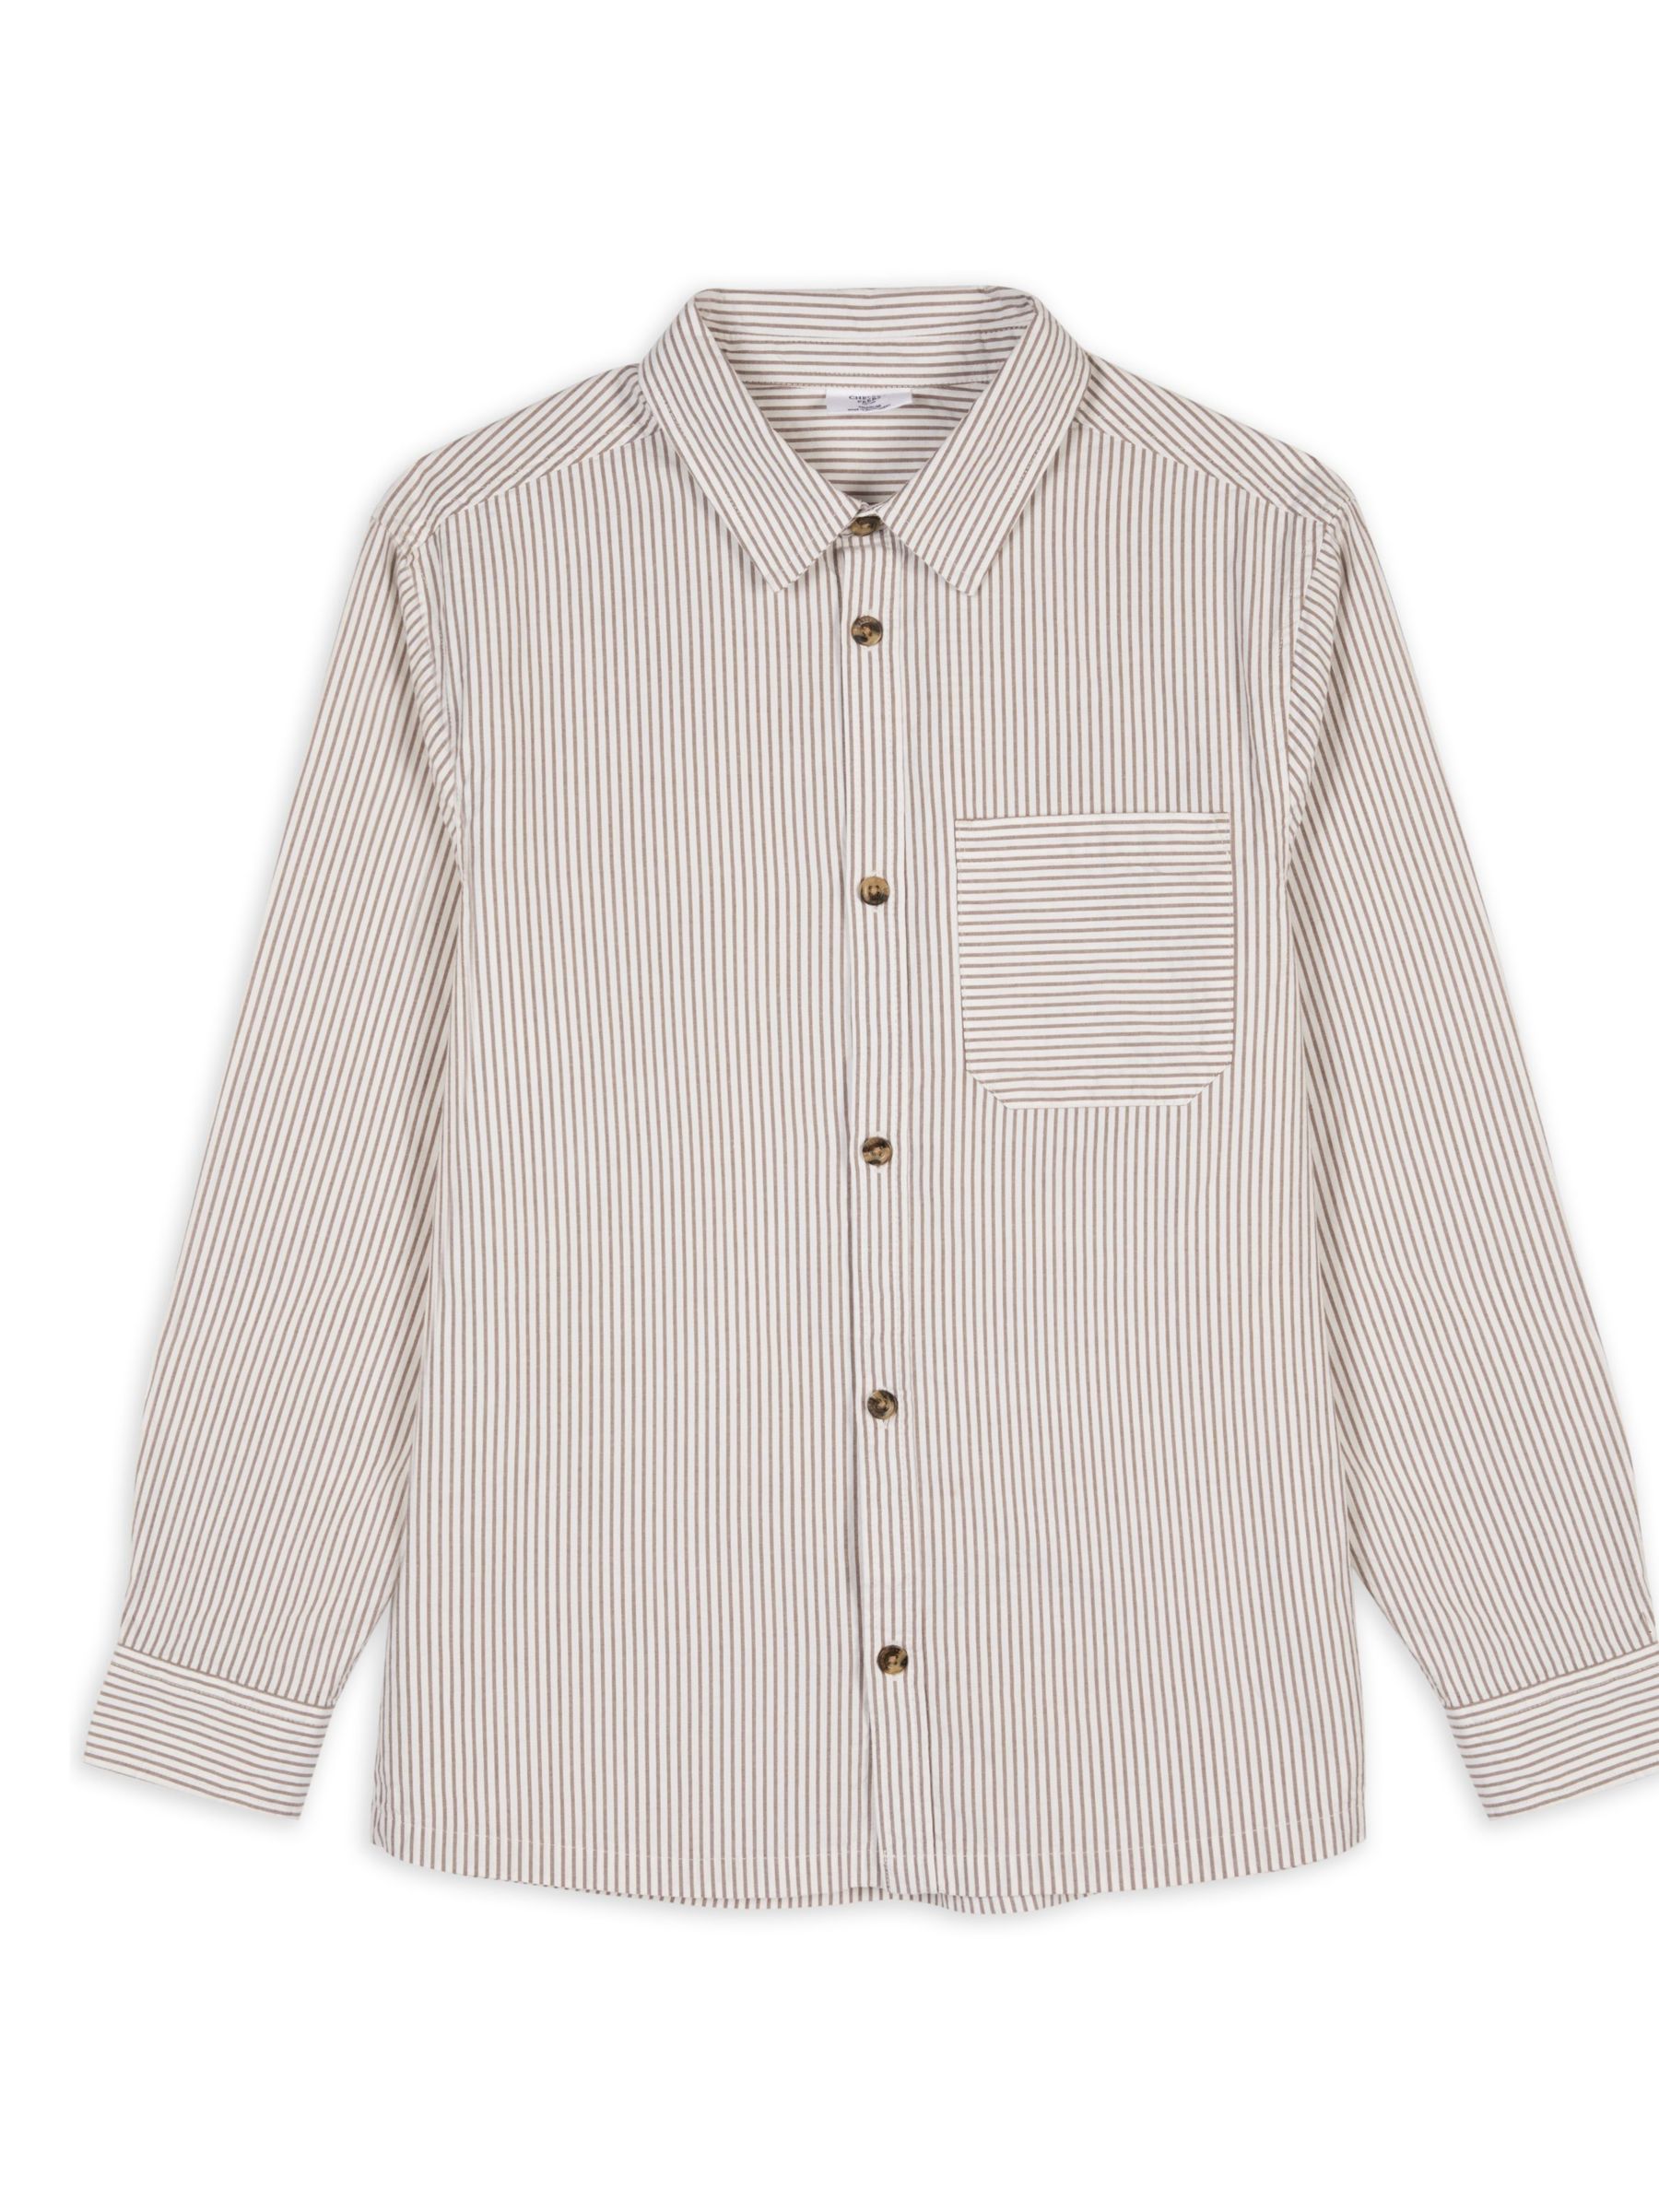 Chelsea Peers Cotton Stripe Shirt, Beige, L